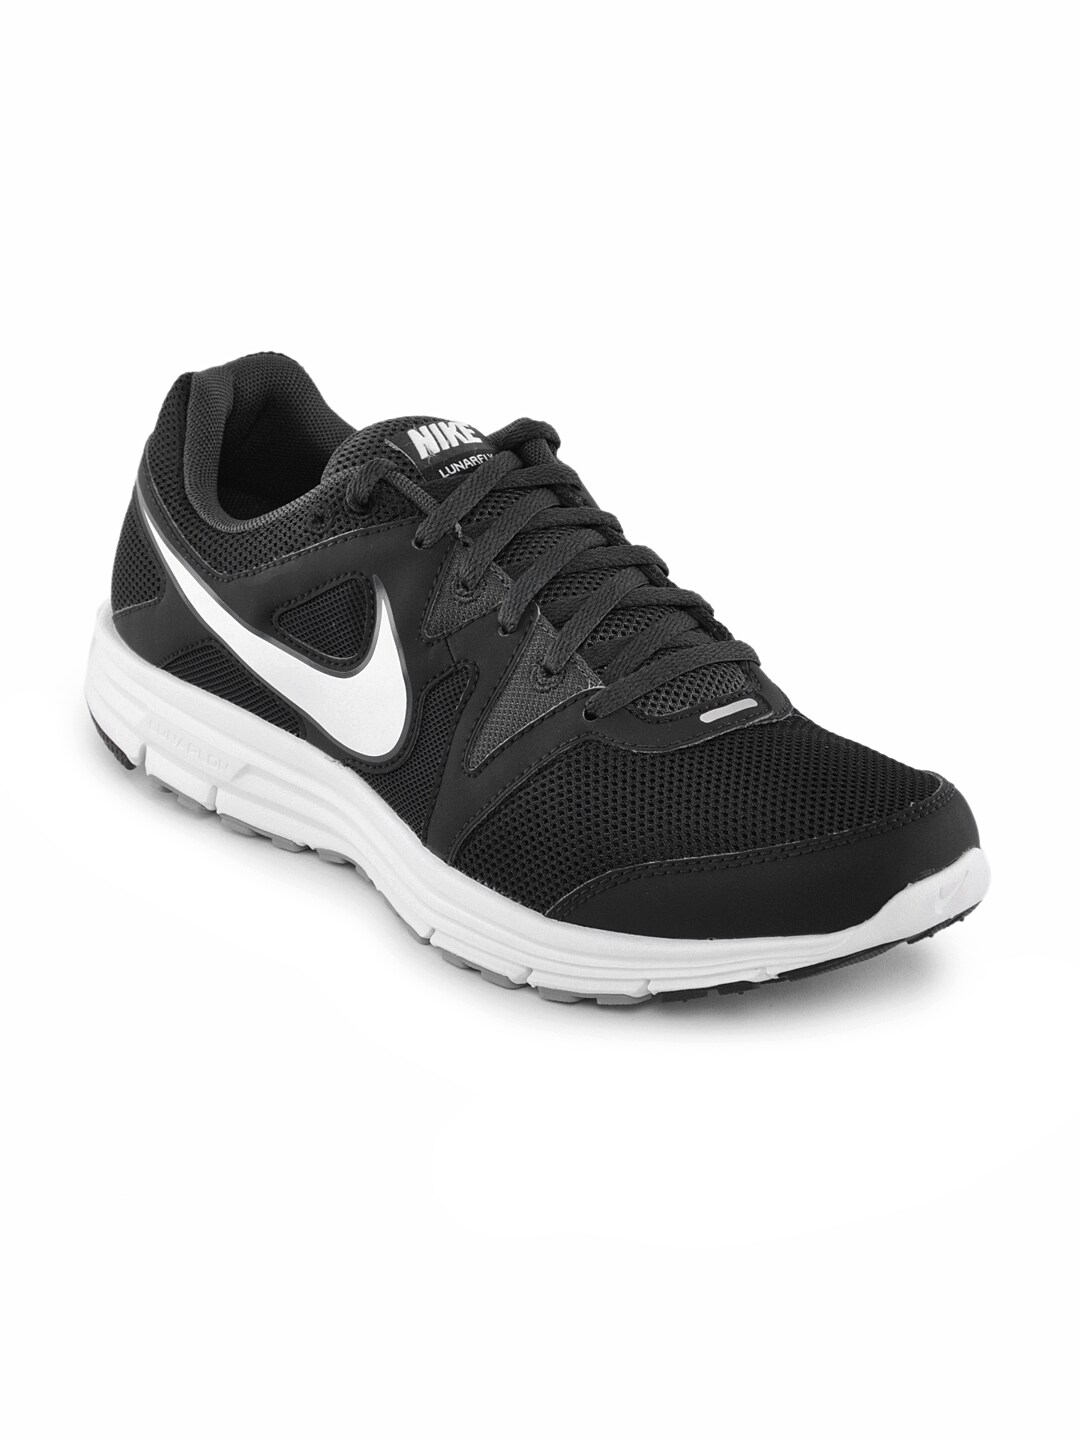 Nike Men Lunarfly +3 Black Sports Shoes